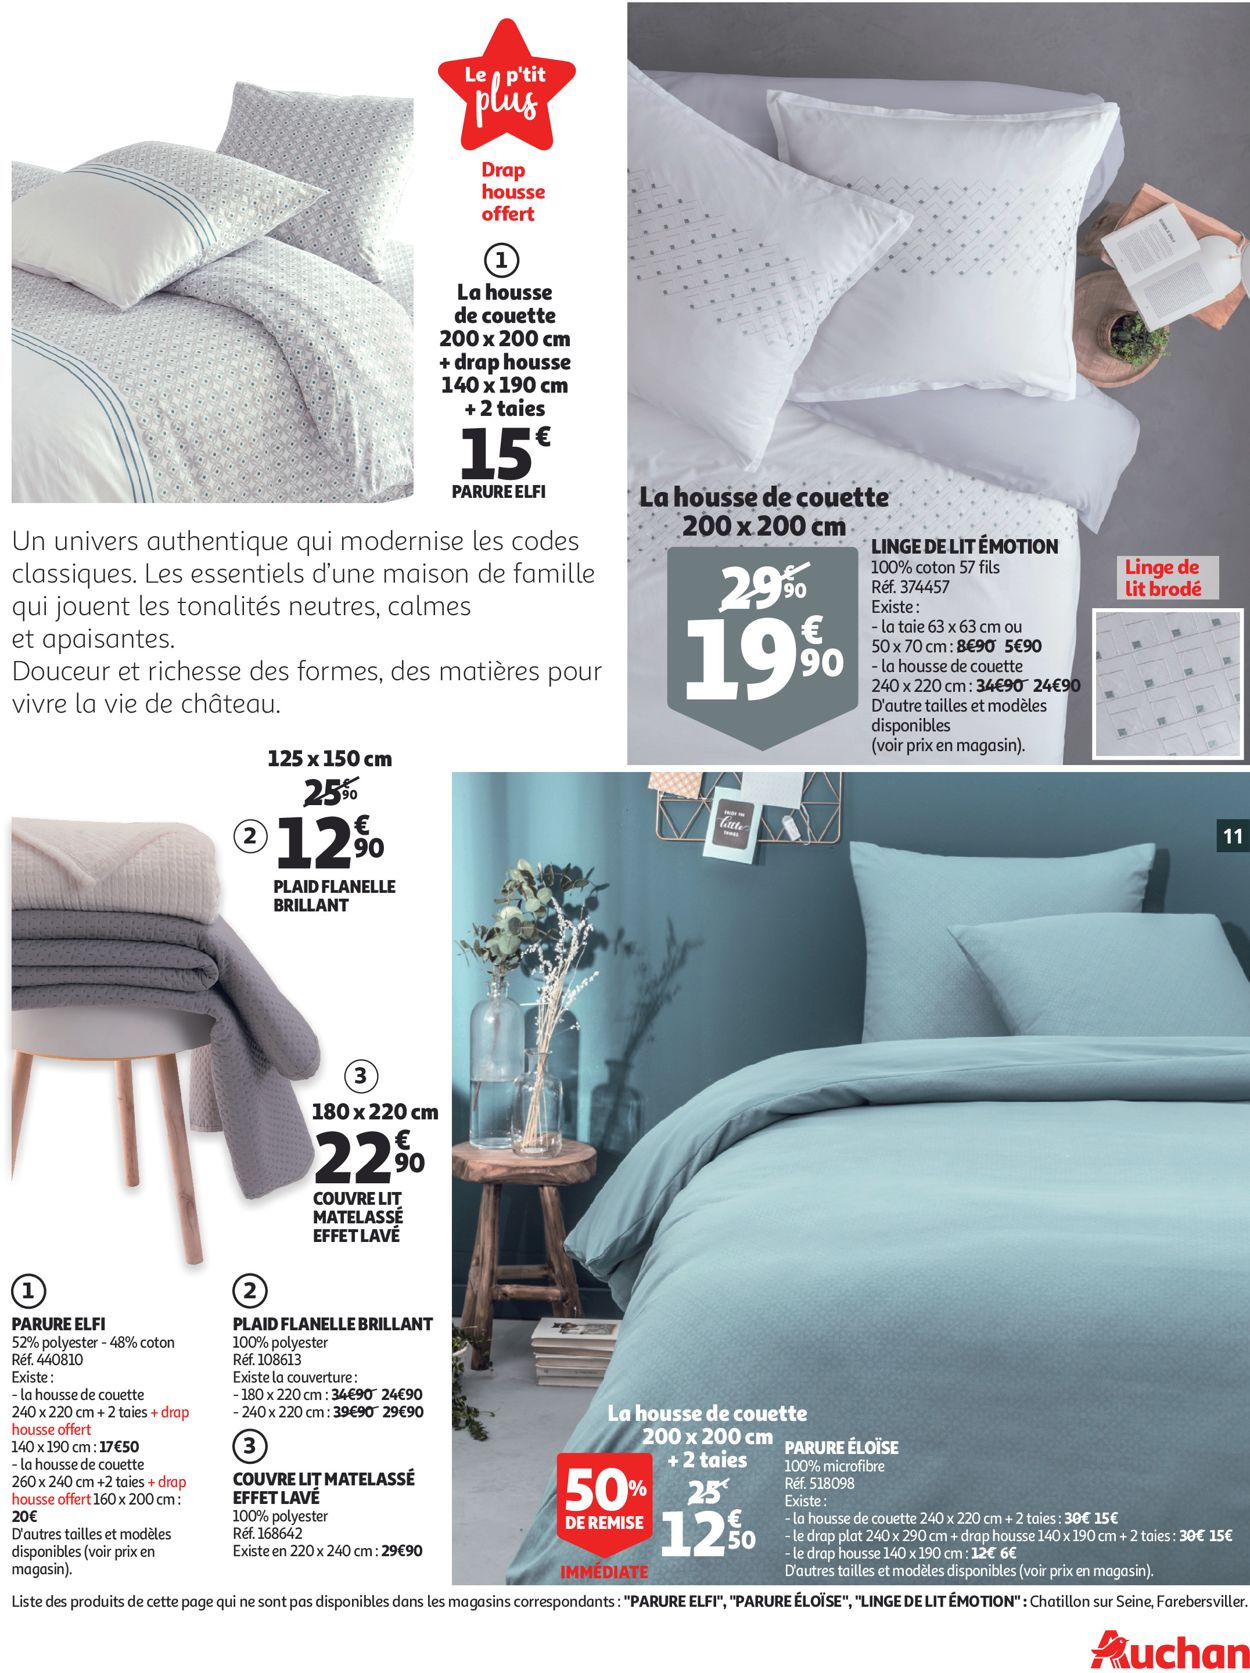 Auchan Catalogue - 26.12-07.01.2020 (Page 11)